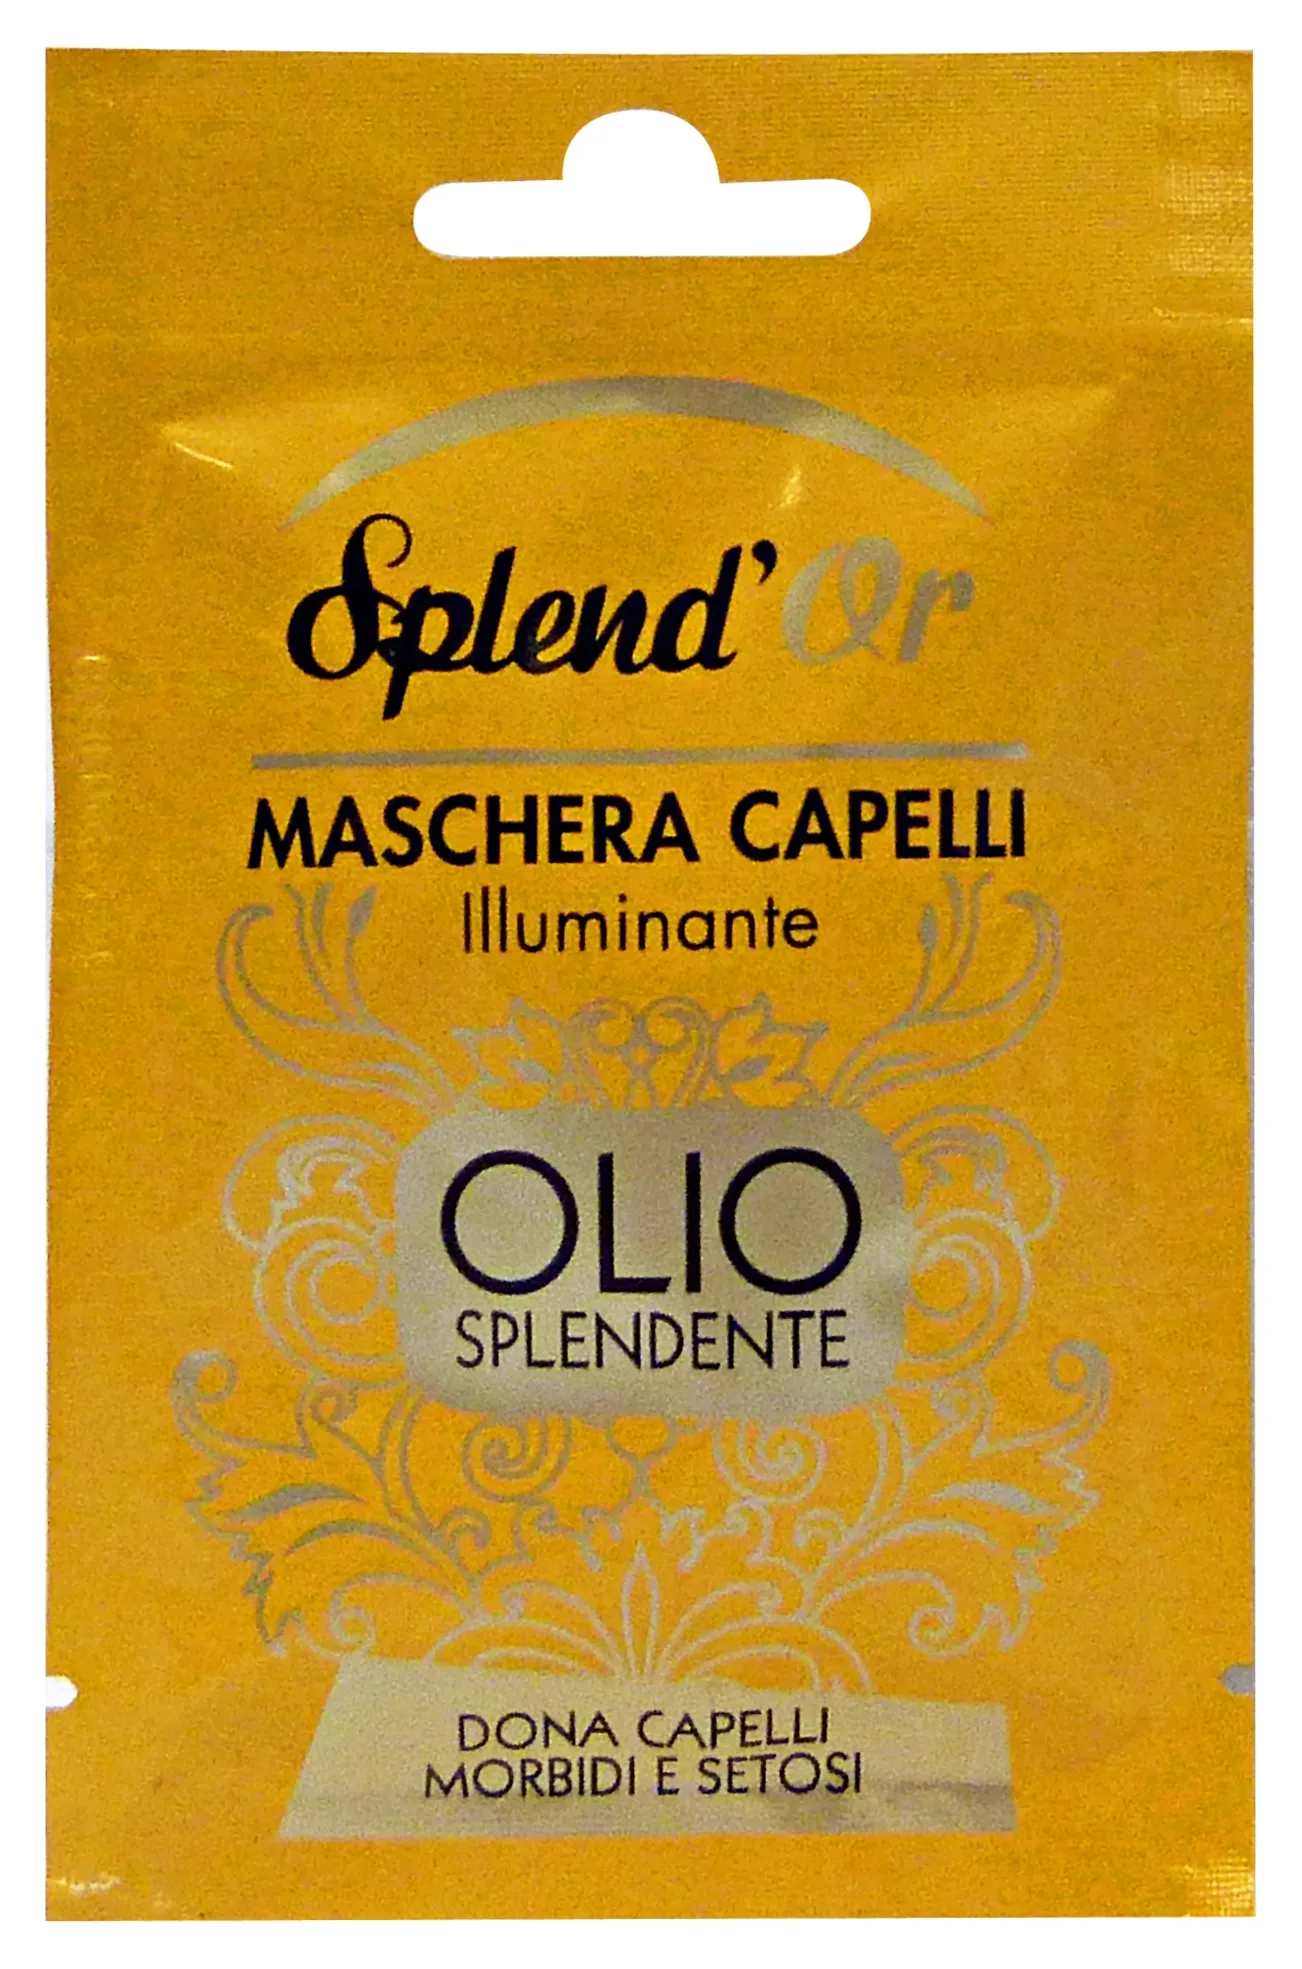 "SPLEND'OR Olio splendente maschera in busta 25 ml."